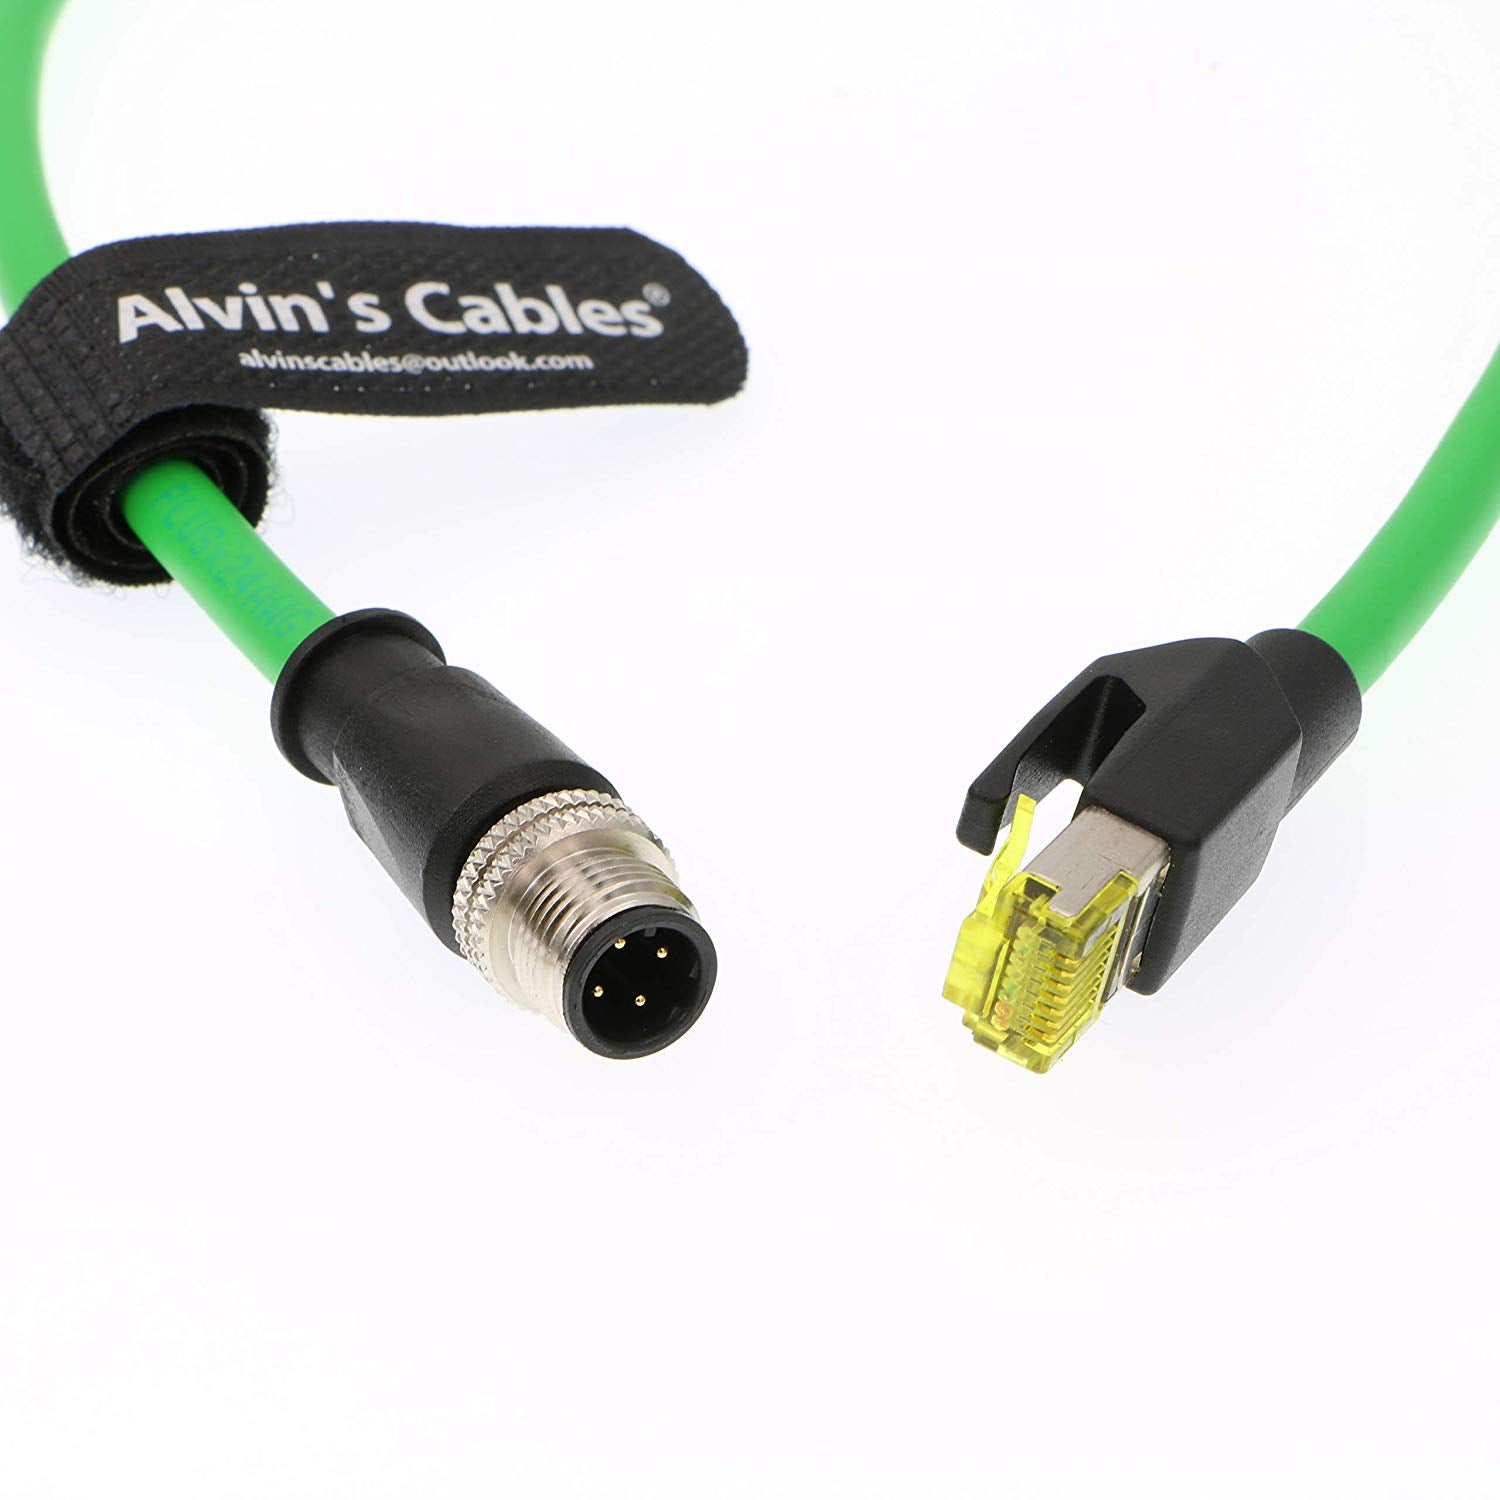 Alvin's Cables M12 4 Pin auf RJ45 Industrial Ethernet Kabel 4 Position D-codiertes Netzwerkkabel CAT5 Abgeschirmtes Kabel 1M